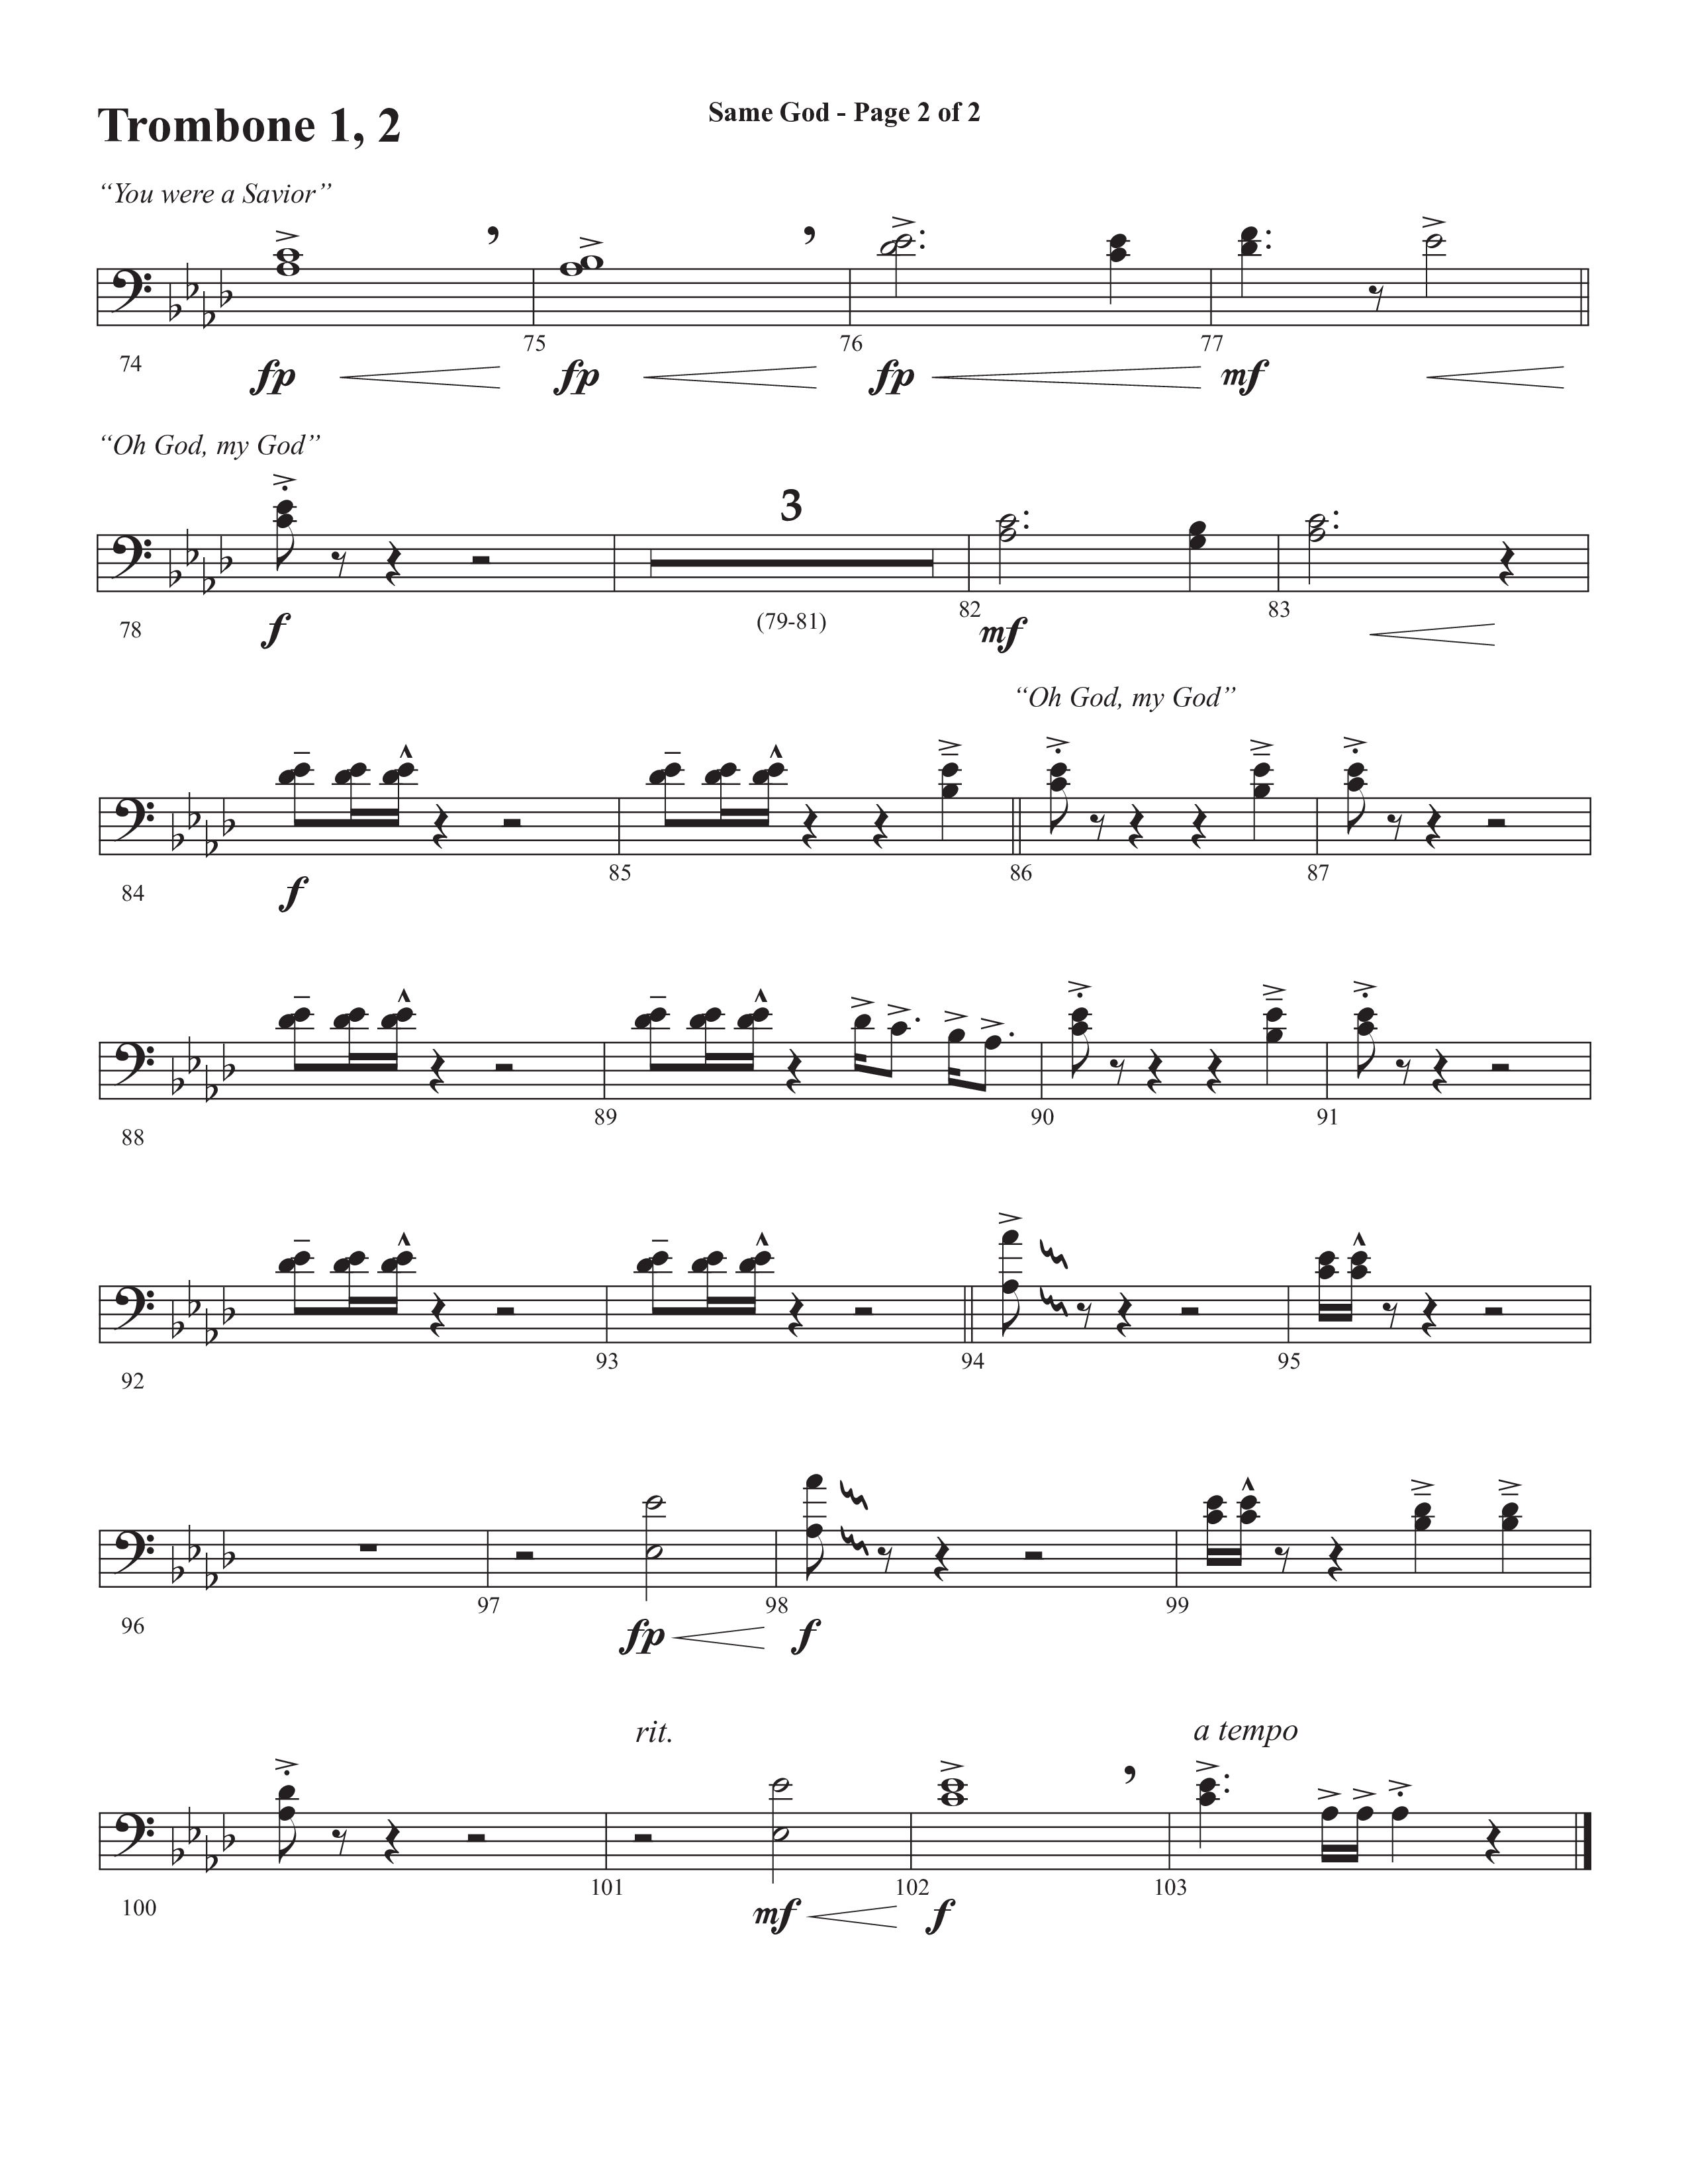 Same God (Choral Anthem SATB) Trombone 1/2 (Semsen Music / Arr. Phil Nitz)